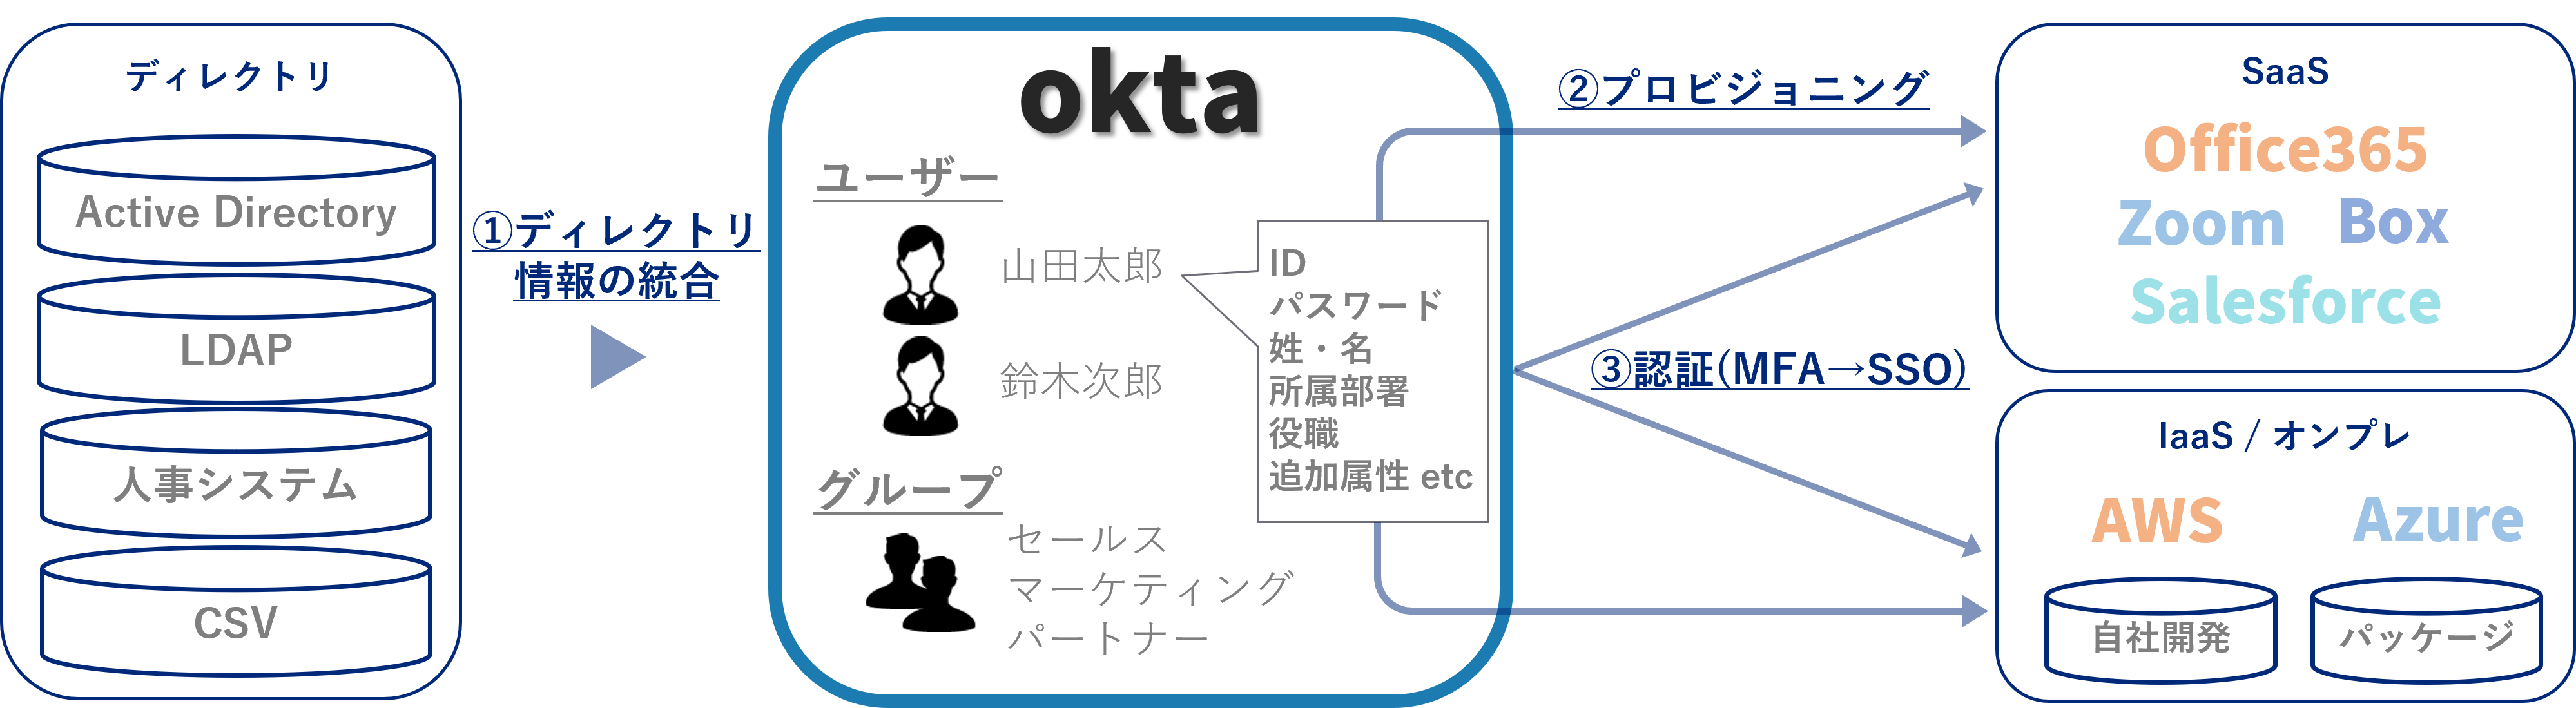 Okta機能説明